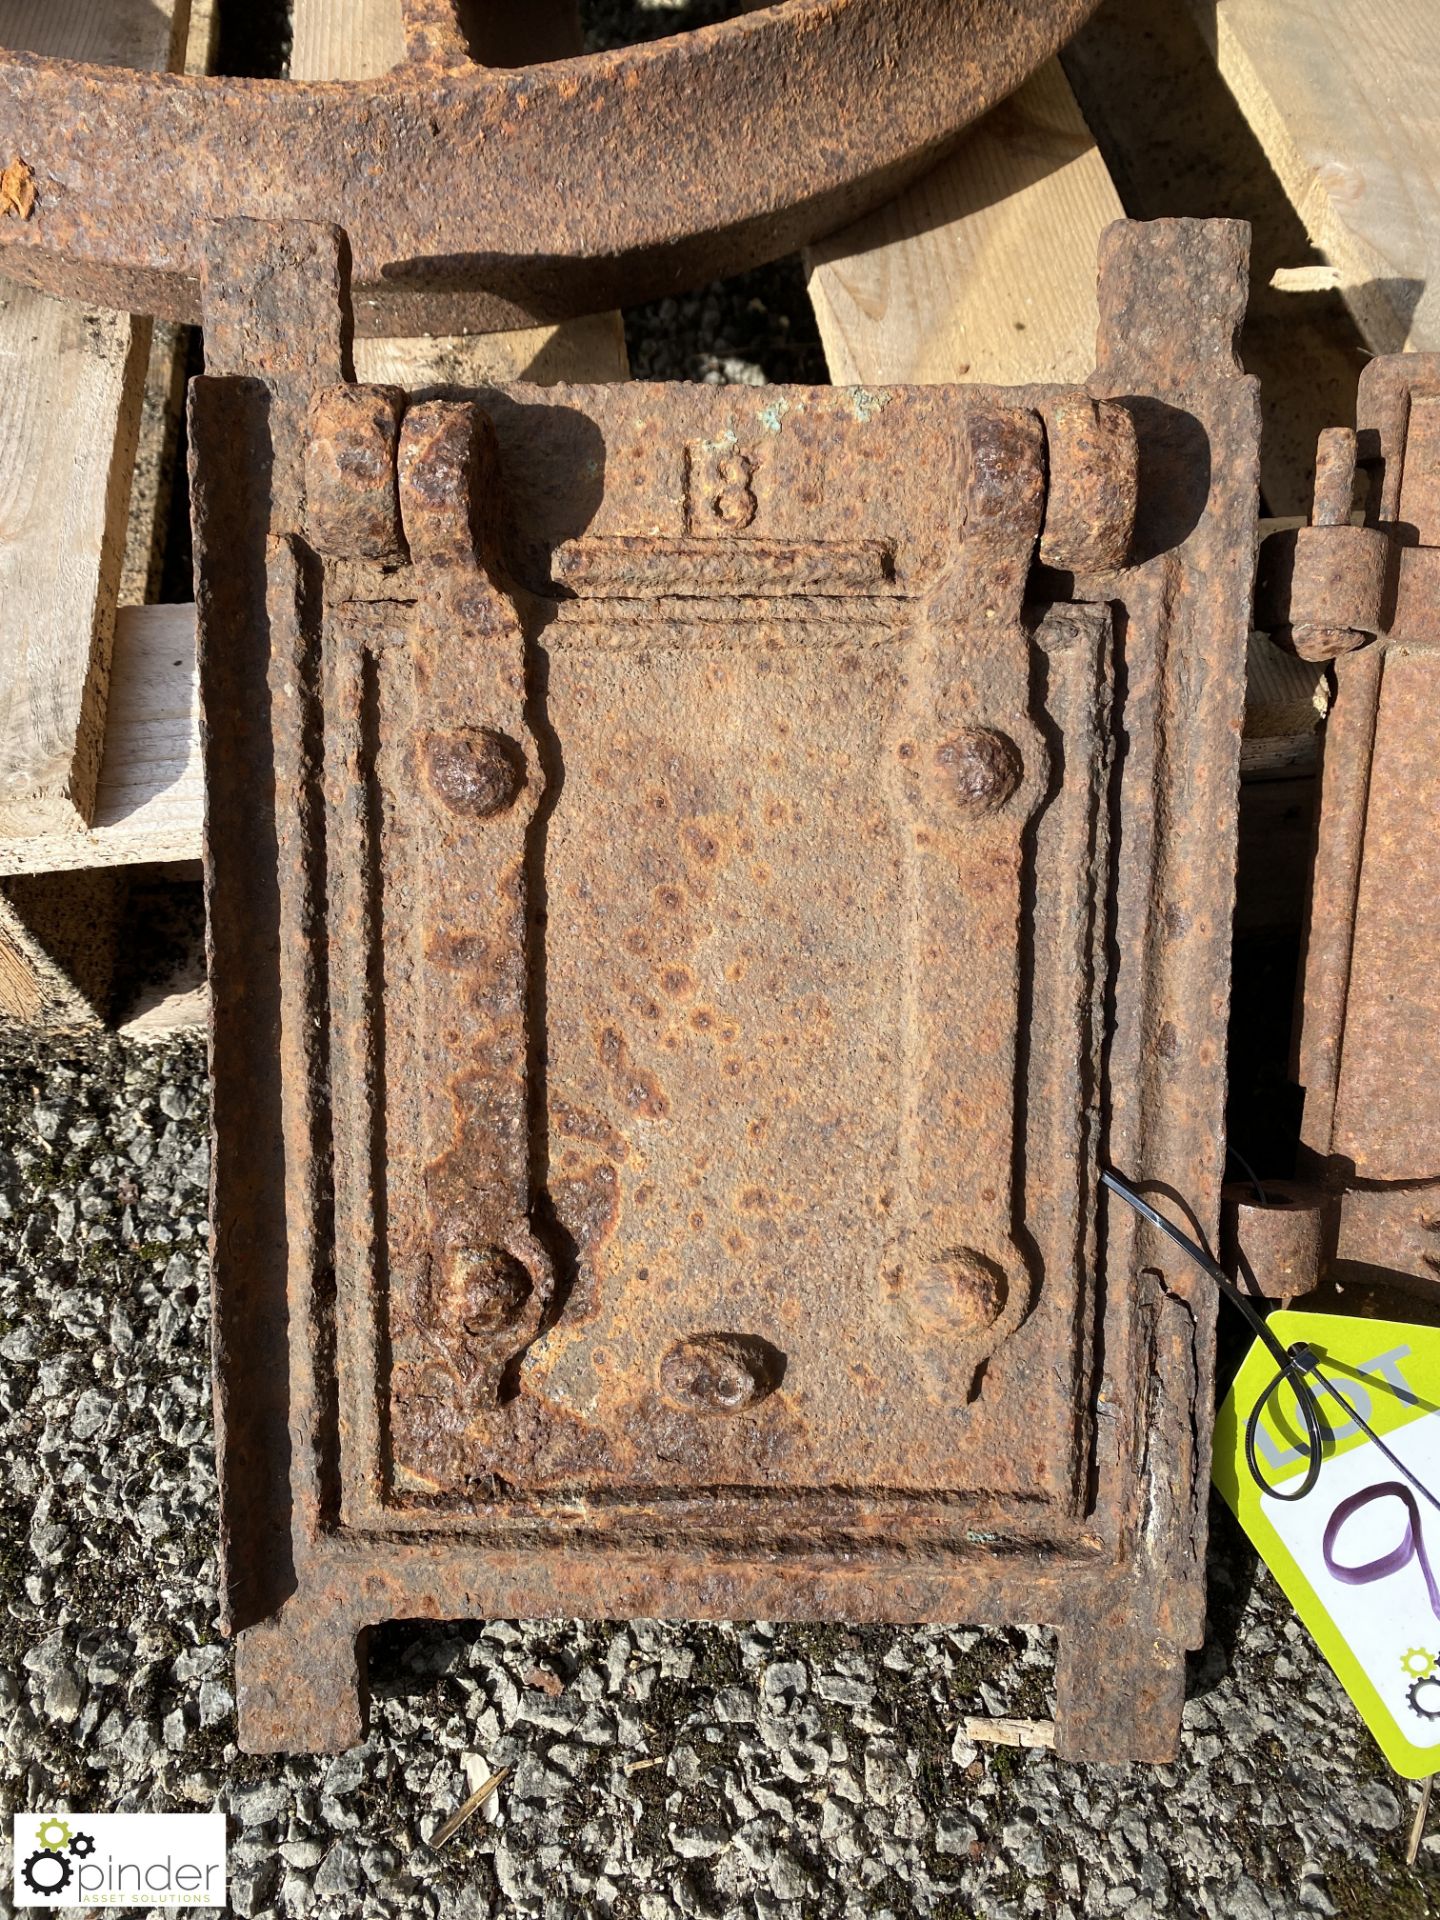 2 cast iron Range Doors - Image 2 of 4